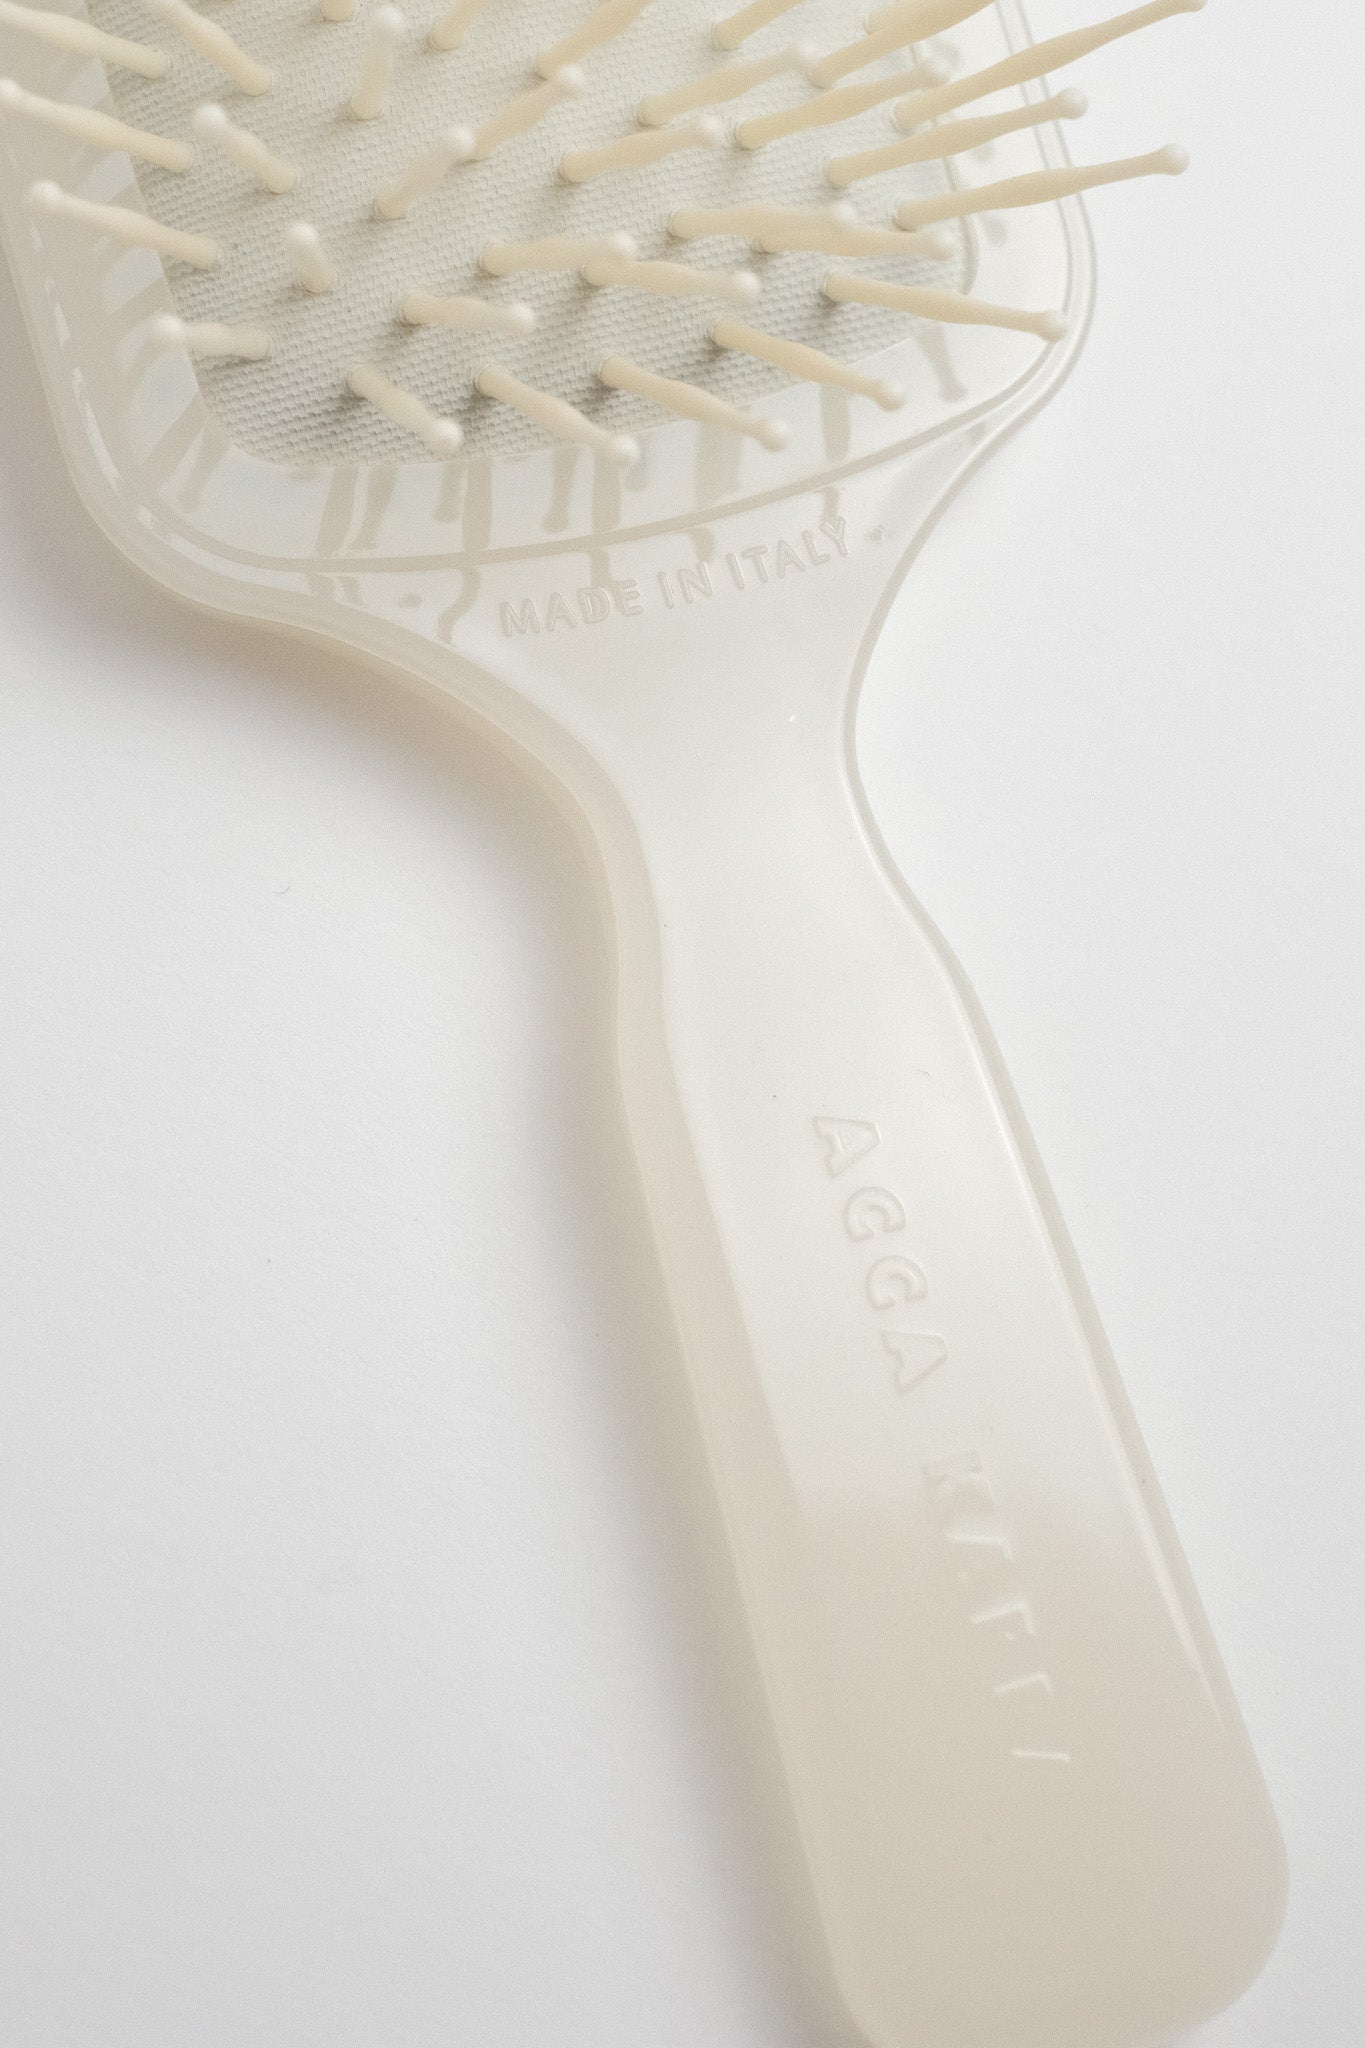 Biodegradable Travel Hairbrush - Ivory